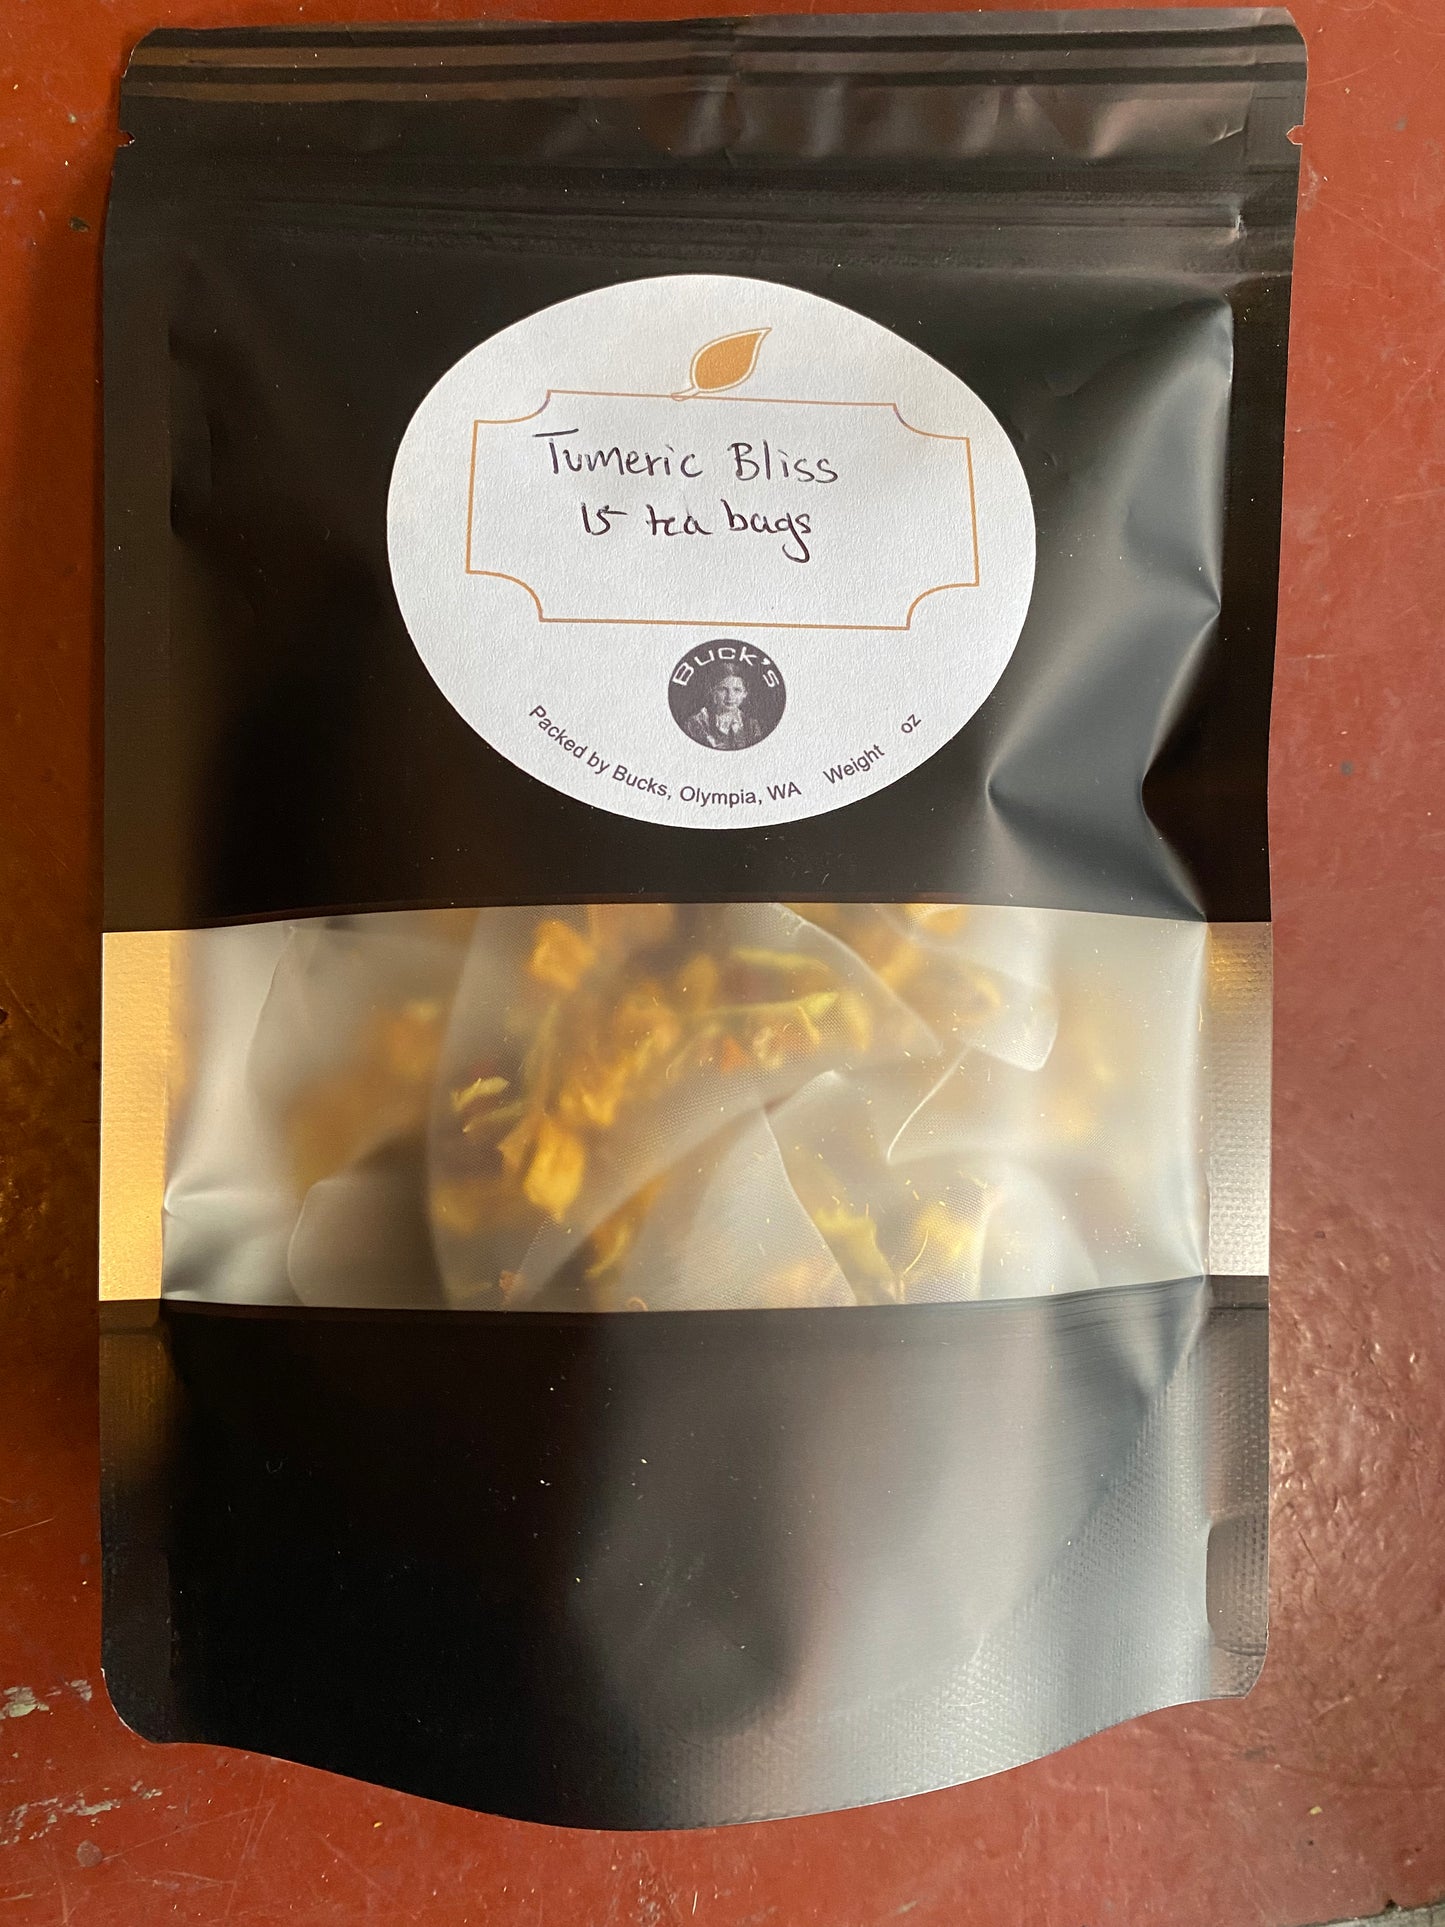 Full-Leaf Sunny Turmeric Bliss Tea Bags